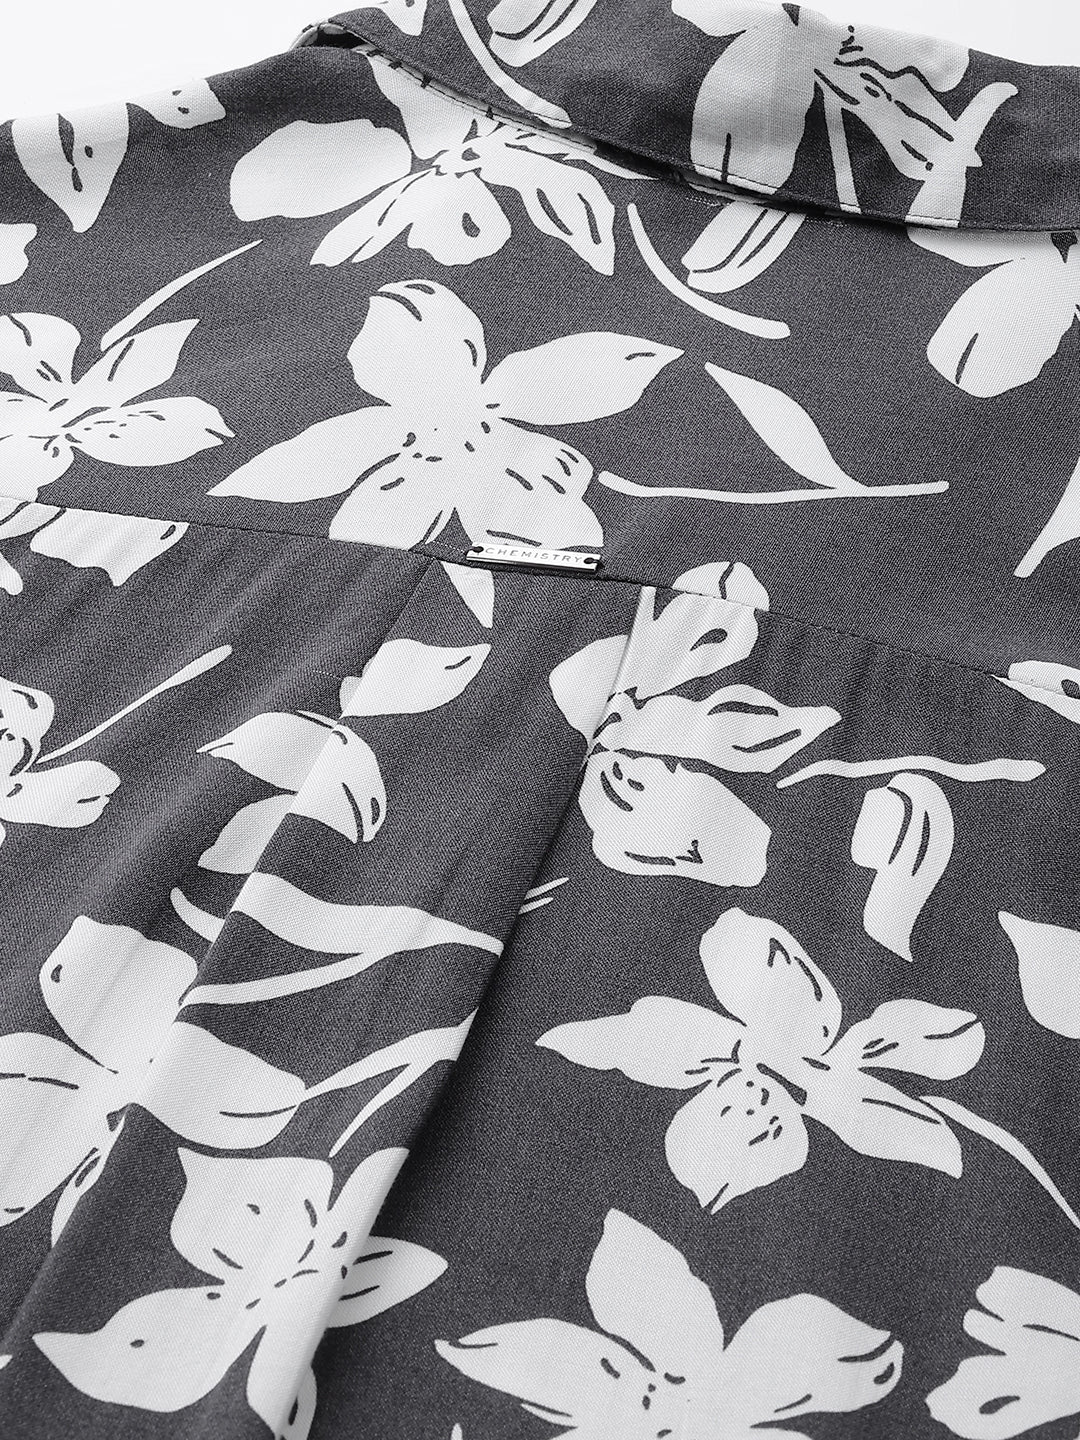 Floral Printed Viscose Shirt With Hi - Low Hemline